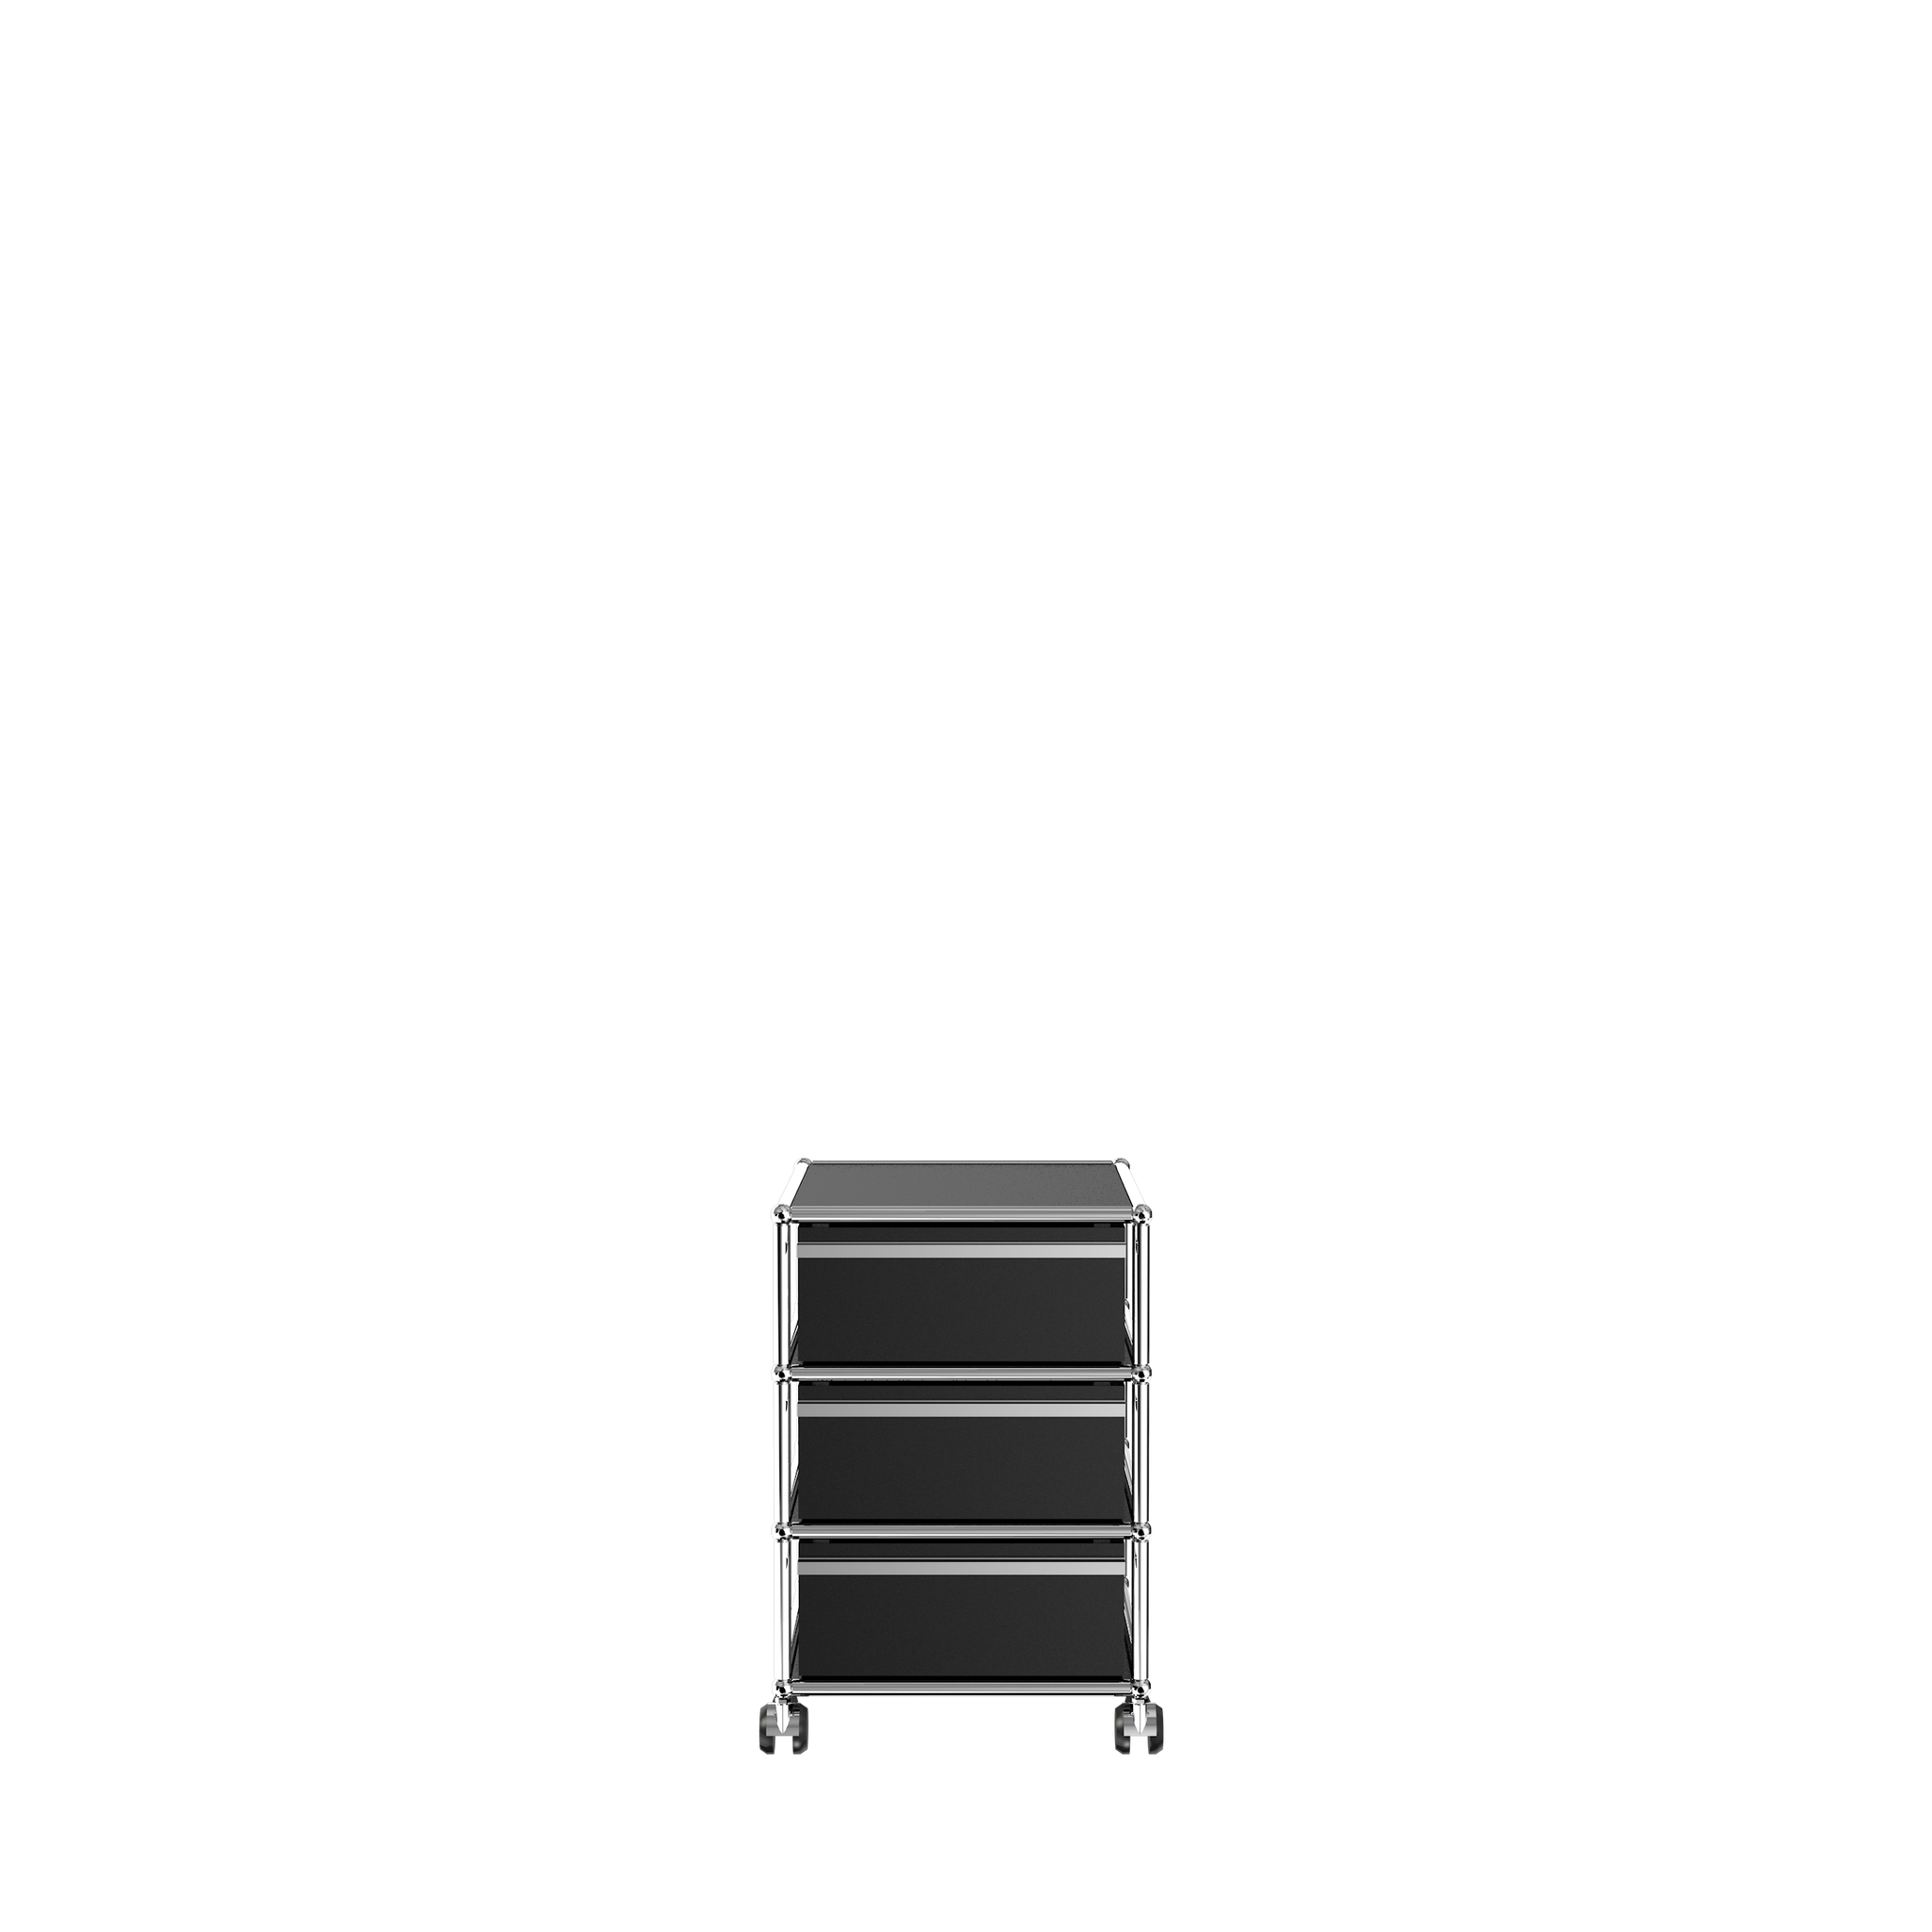 USM Modular Storage Pedestal with Drawers (V) in Graphite Black